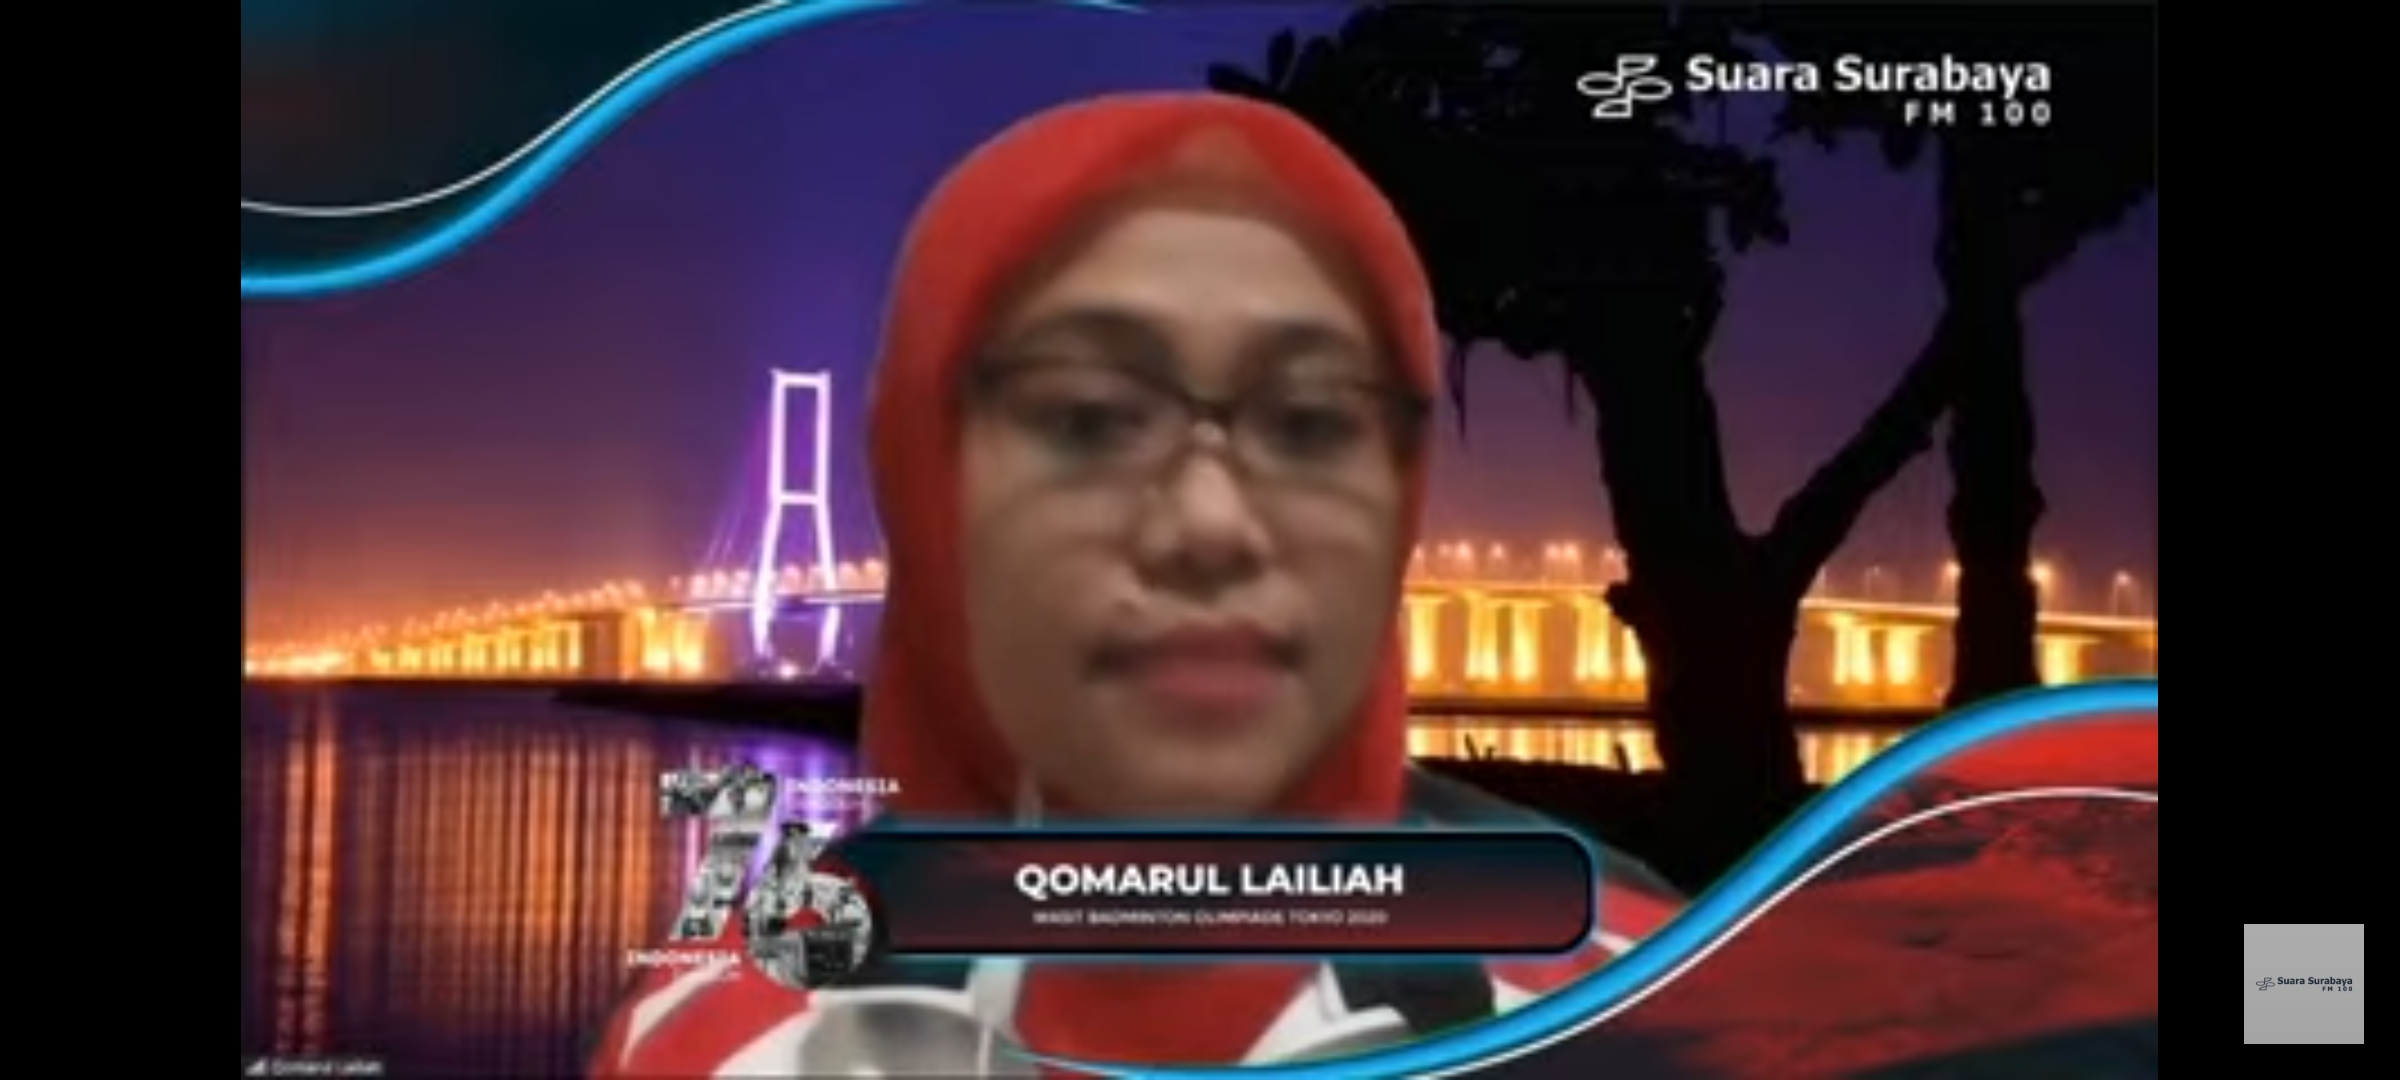 qomarul-lailiah-wasit-oilmpiade-2020